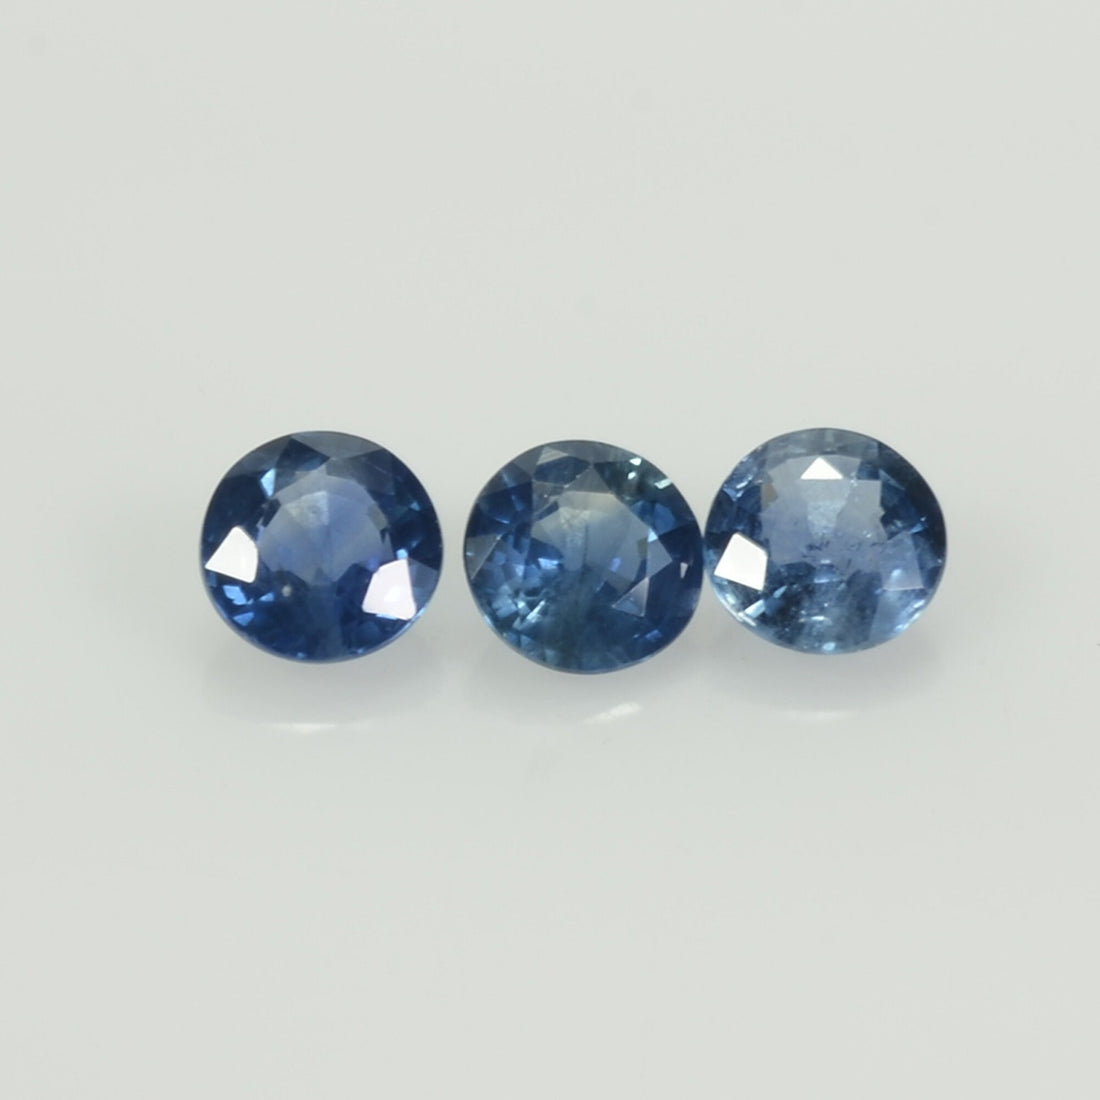 4.7-5.3 MM Natural Blue Sapphire Loose Gemstone Round Cut